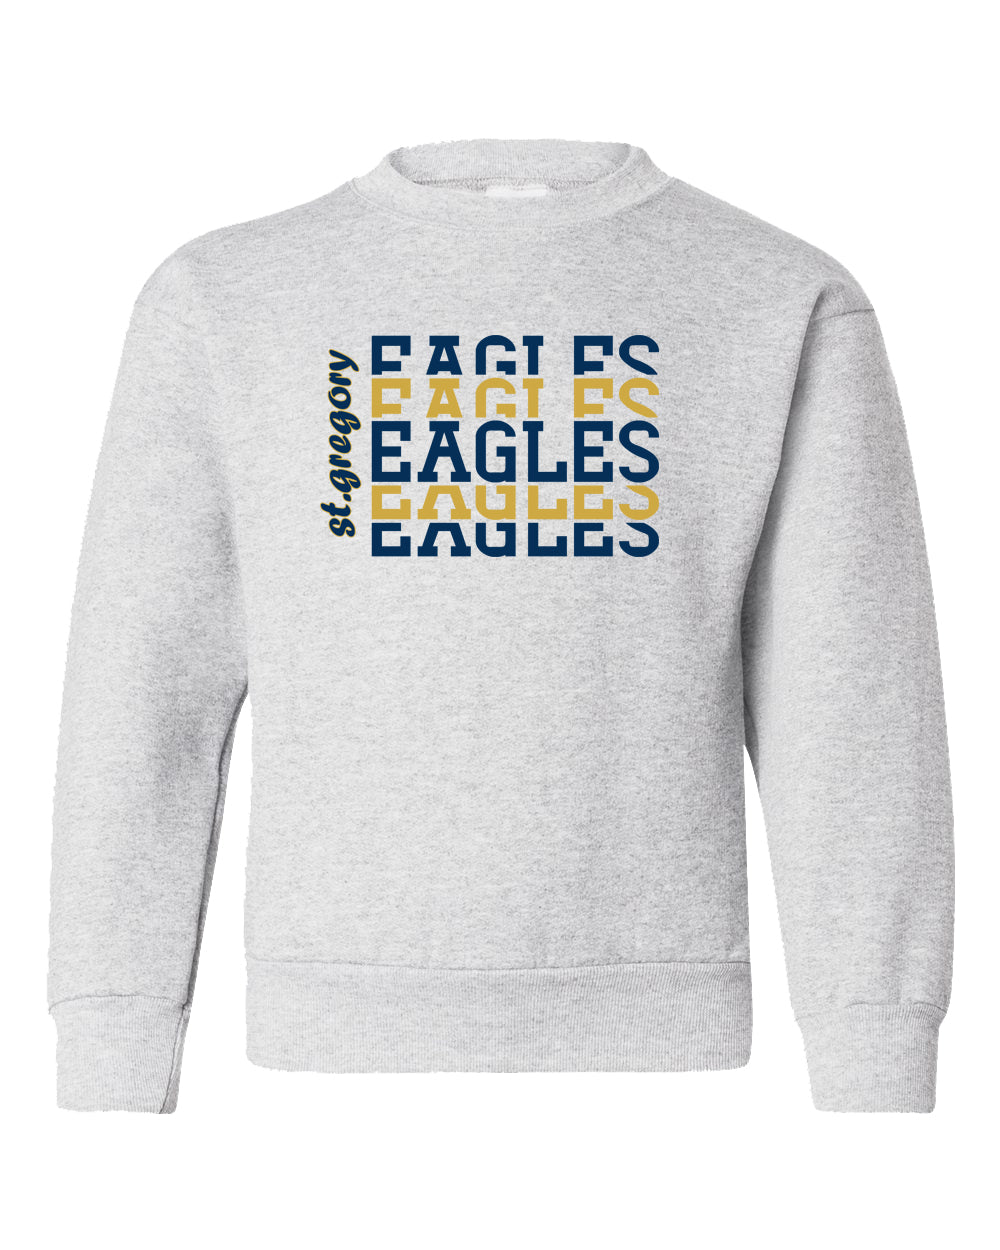 Youth St Gregory Eagles sweatshirt